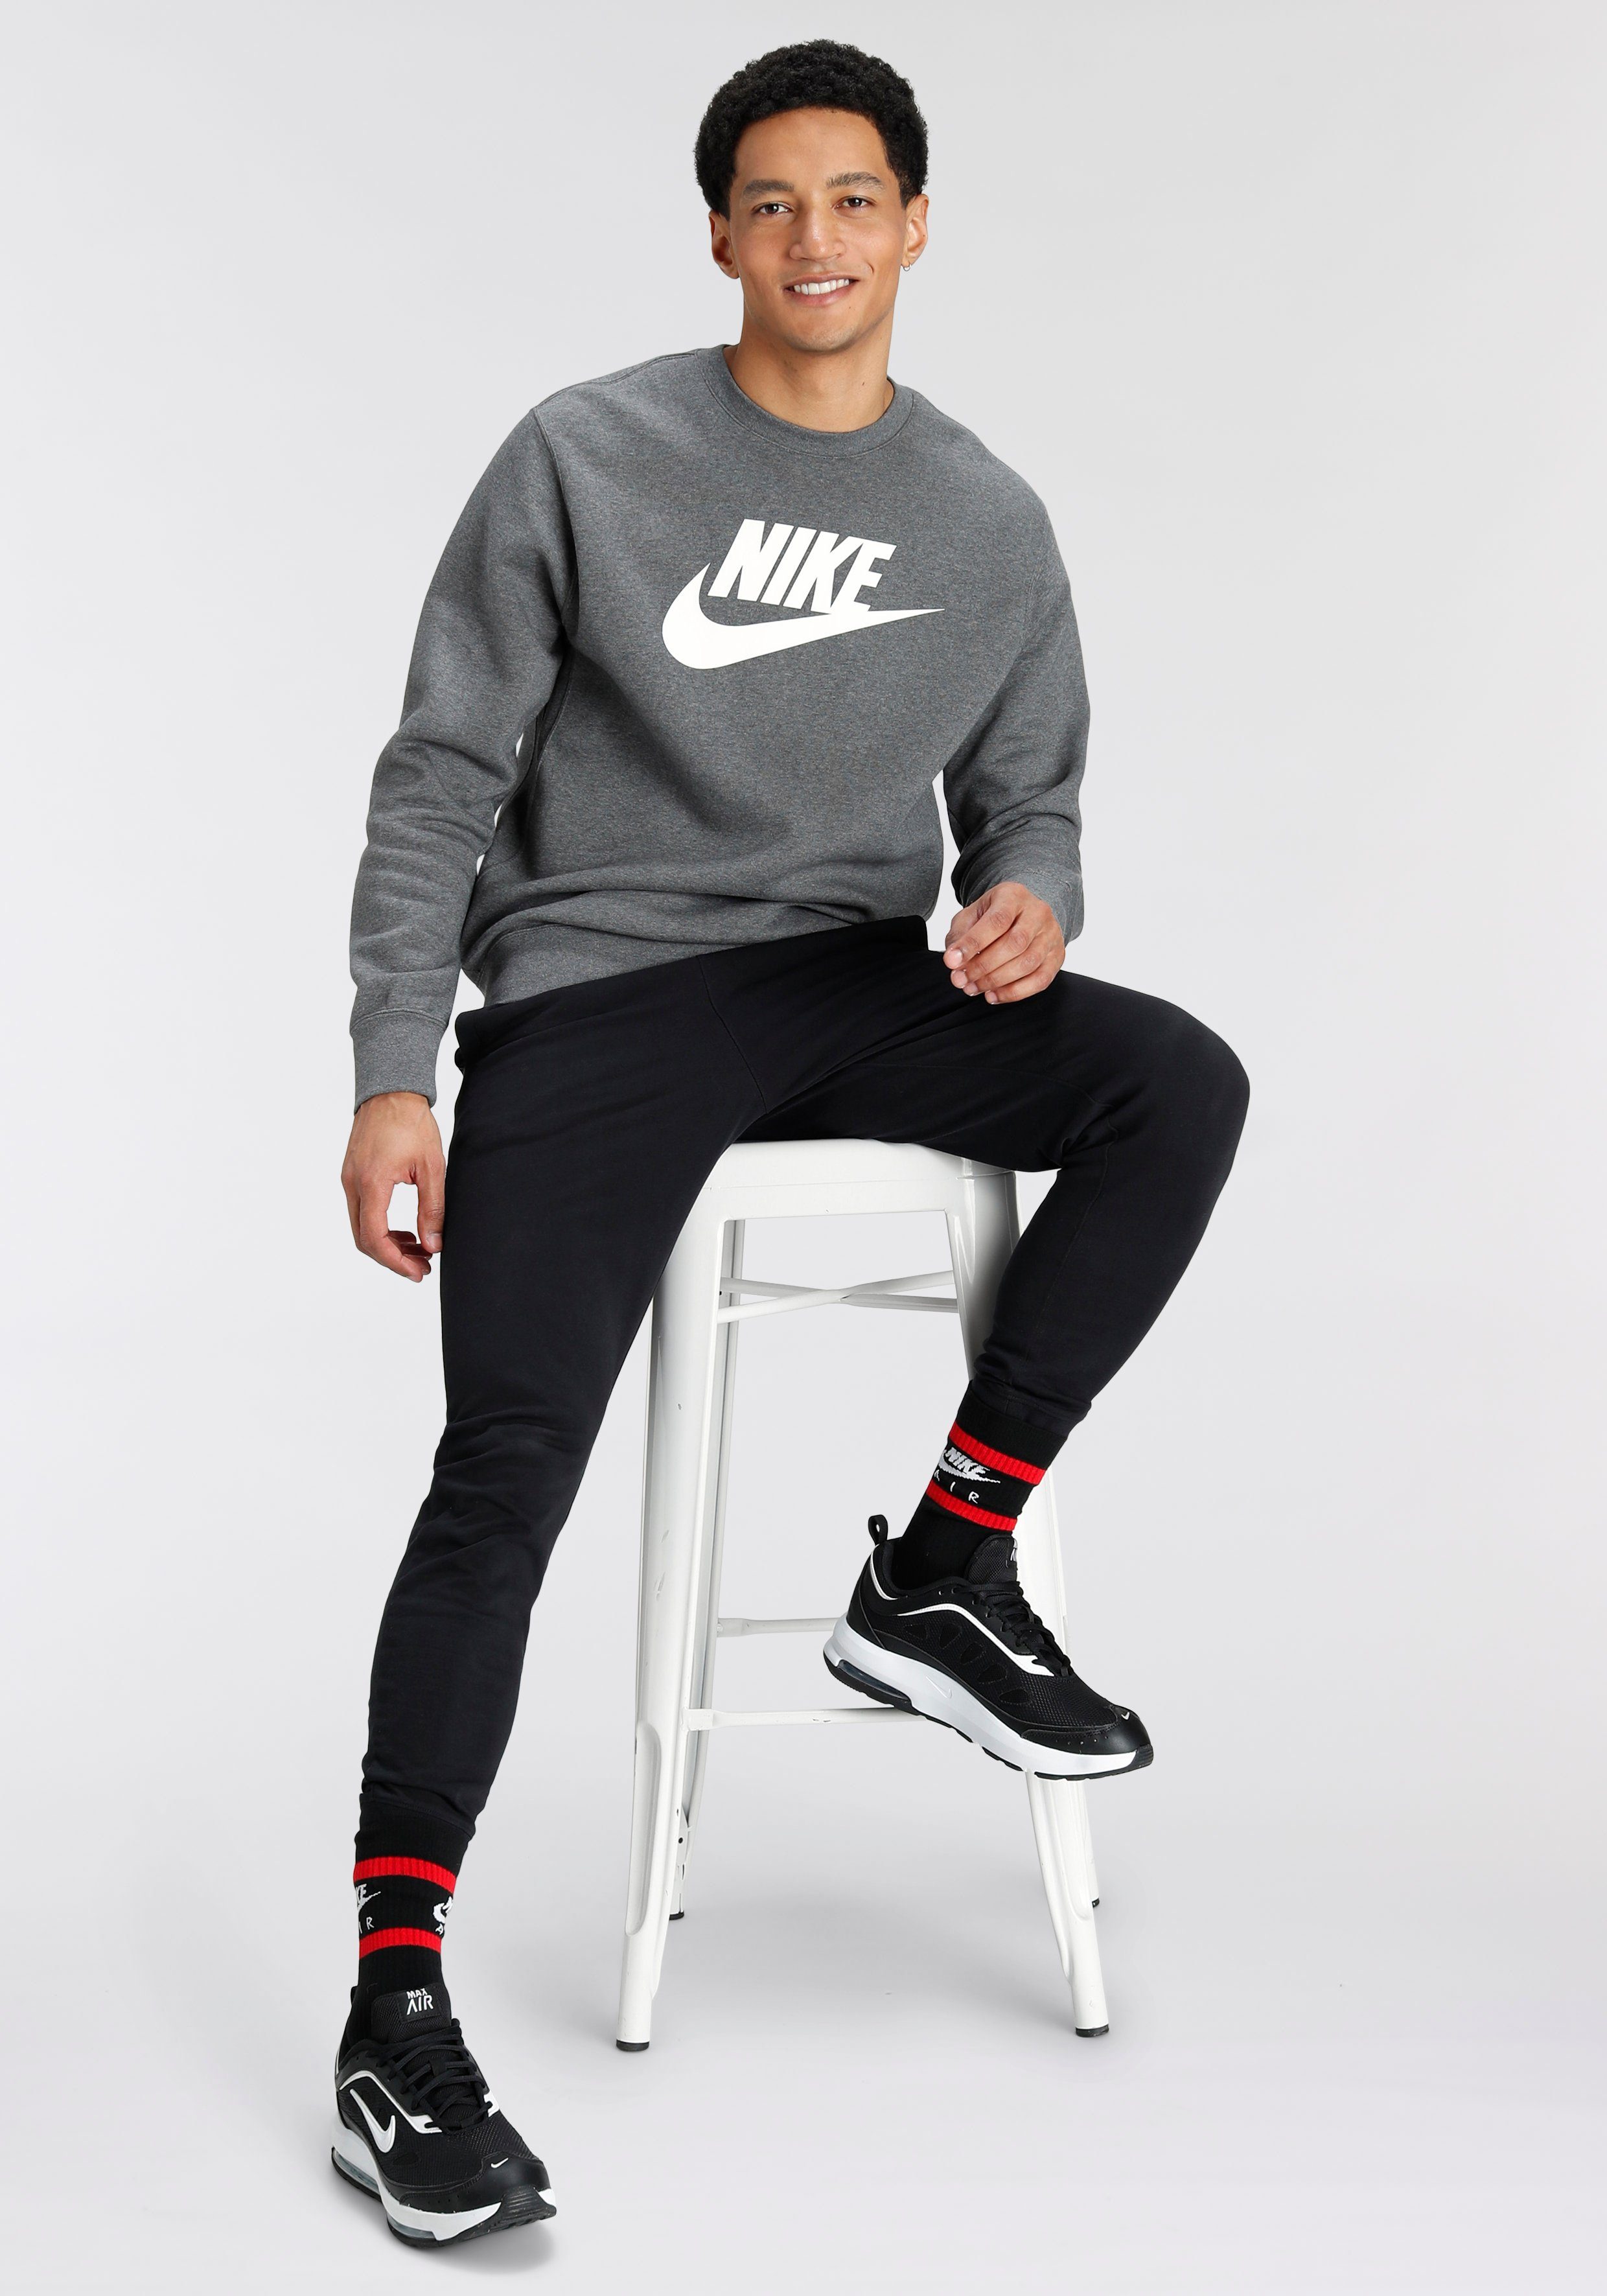 Crew Graphic CHARCOAL Fleece Sweatshirt Men's Nike Sportswear HEATHR Club